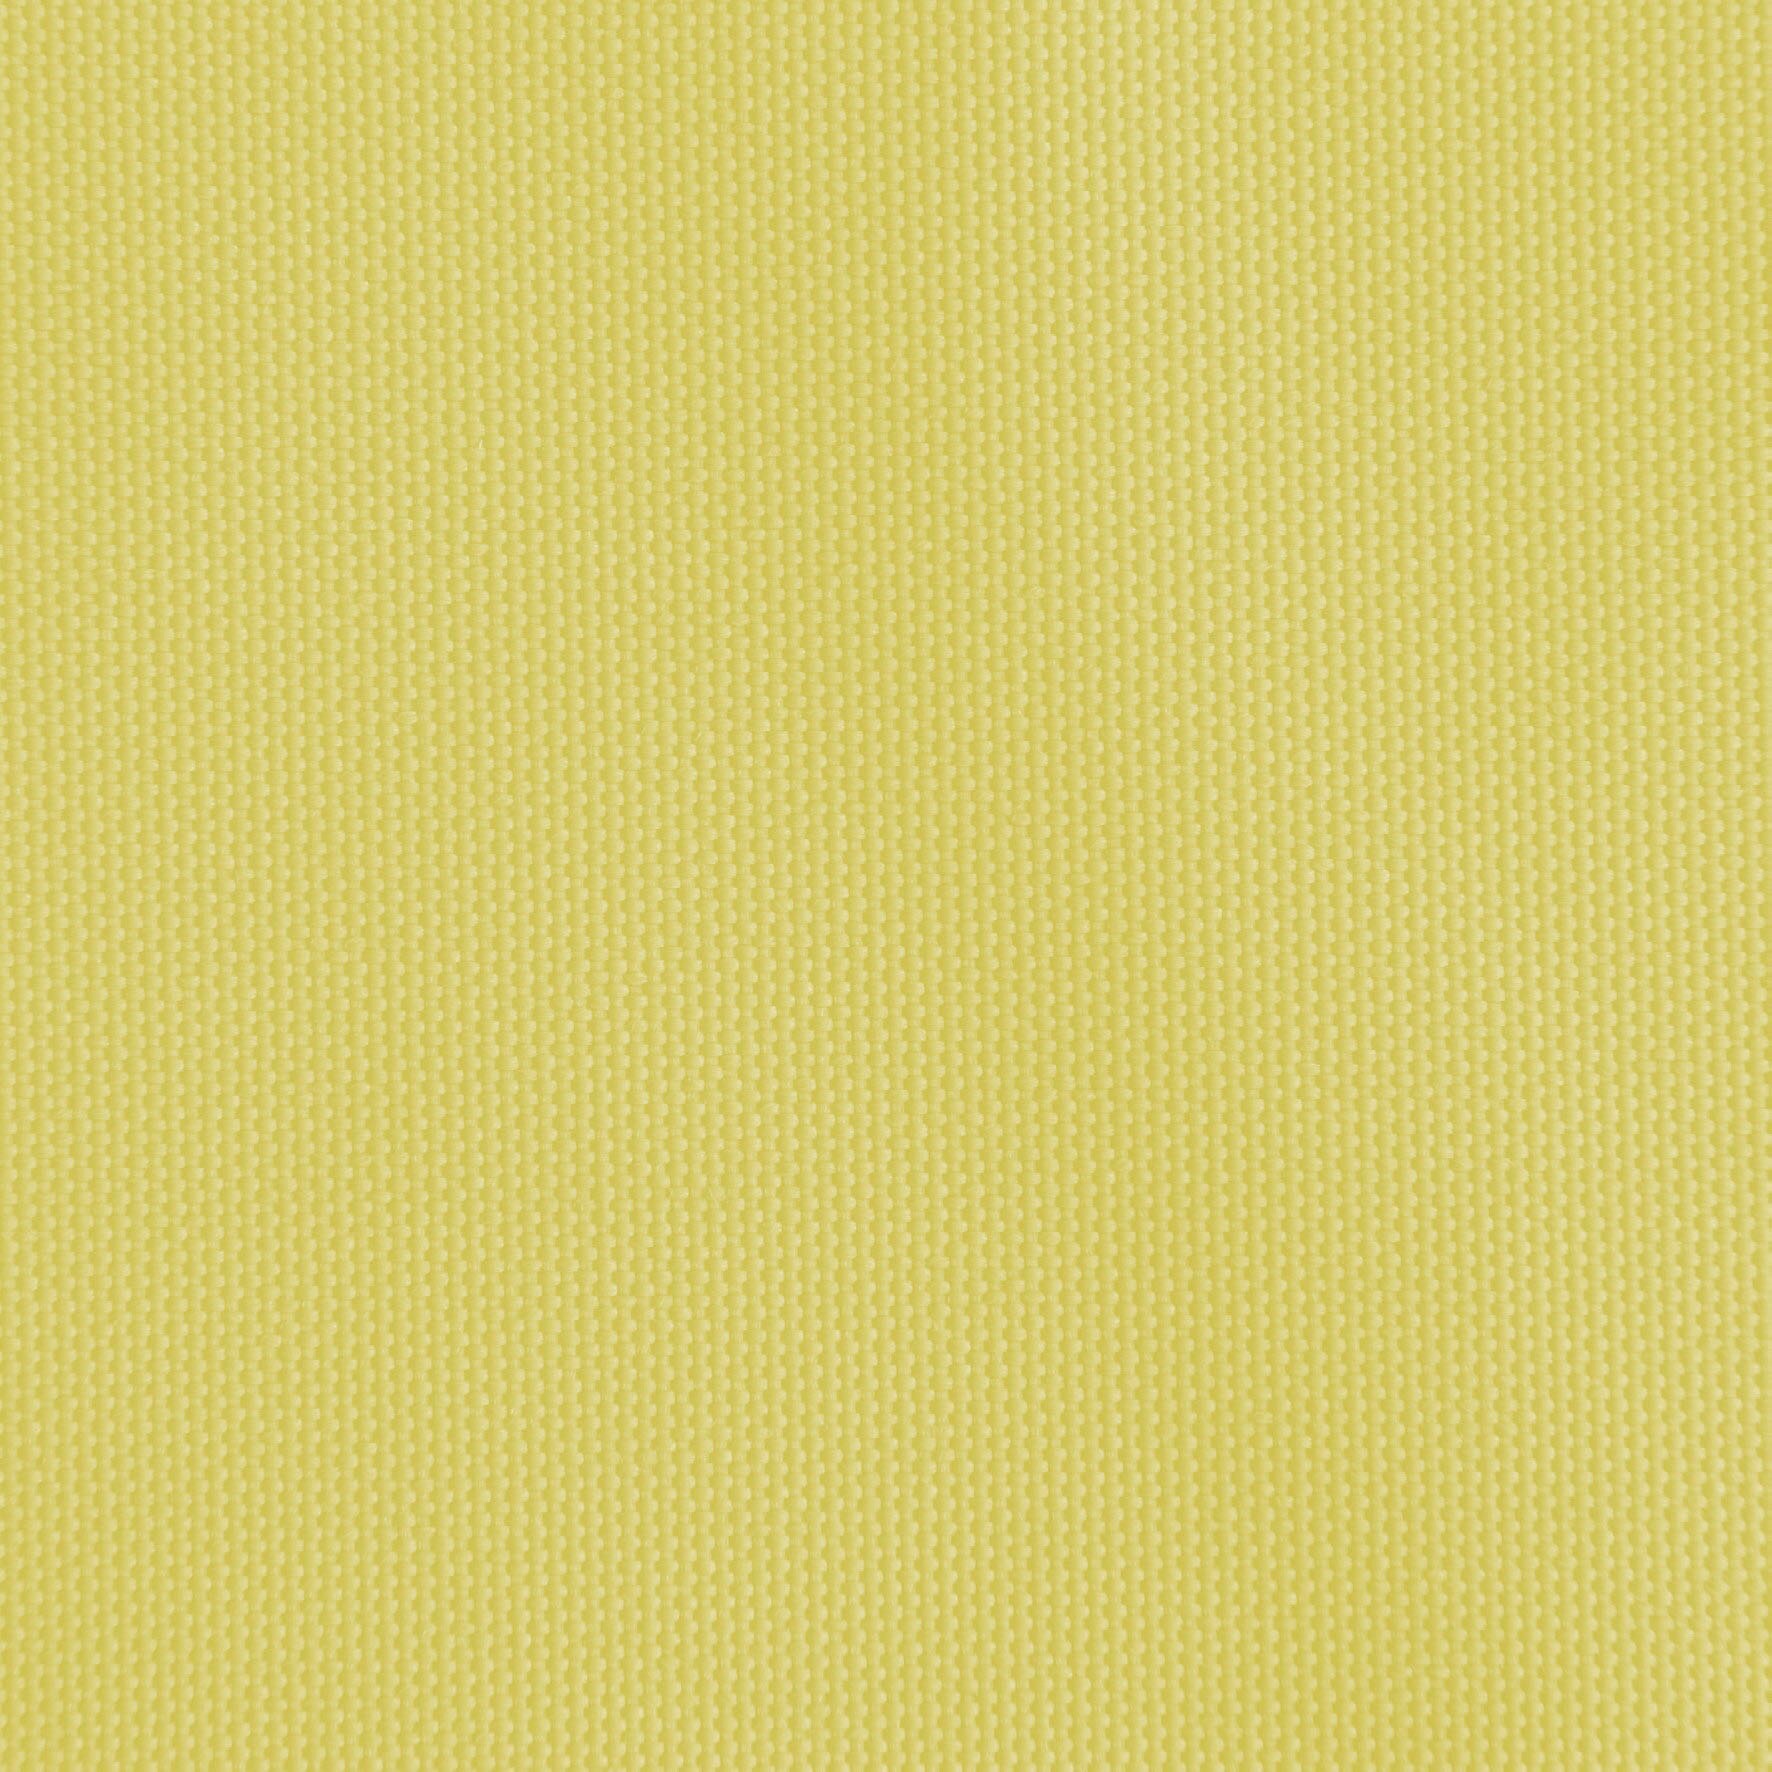 Windhager Sonnensegel »Cannes Quadrat«, 5x5m, gelb